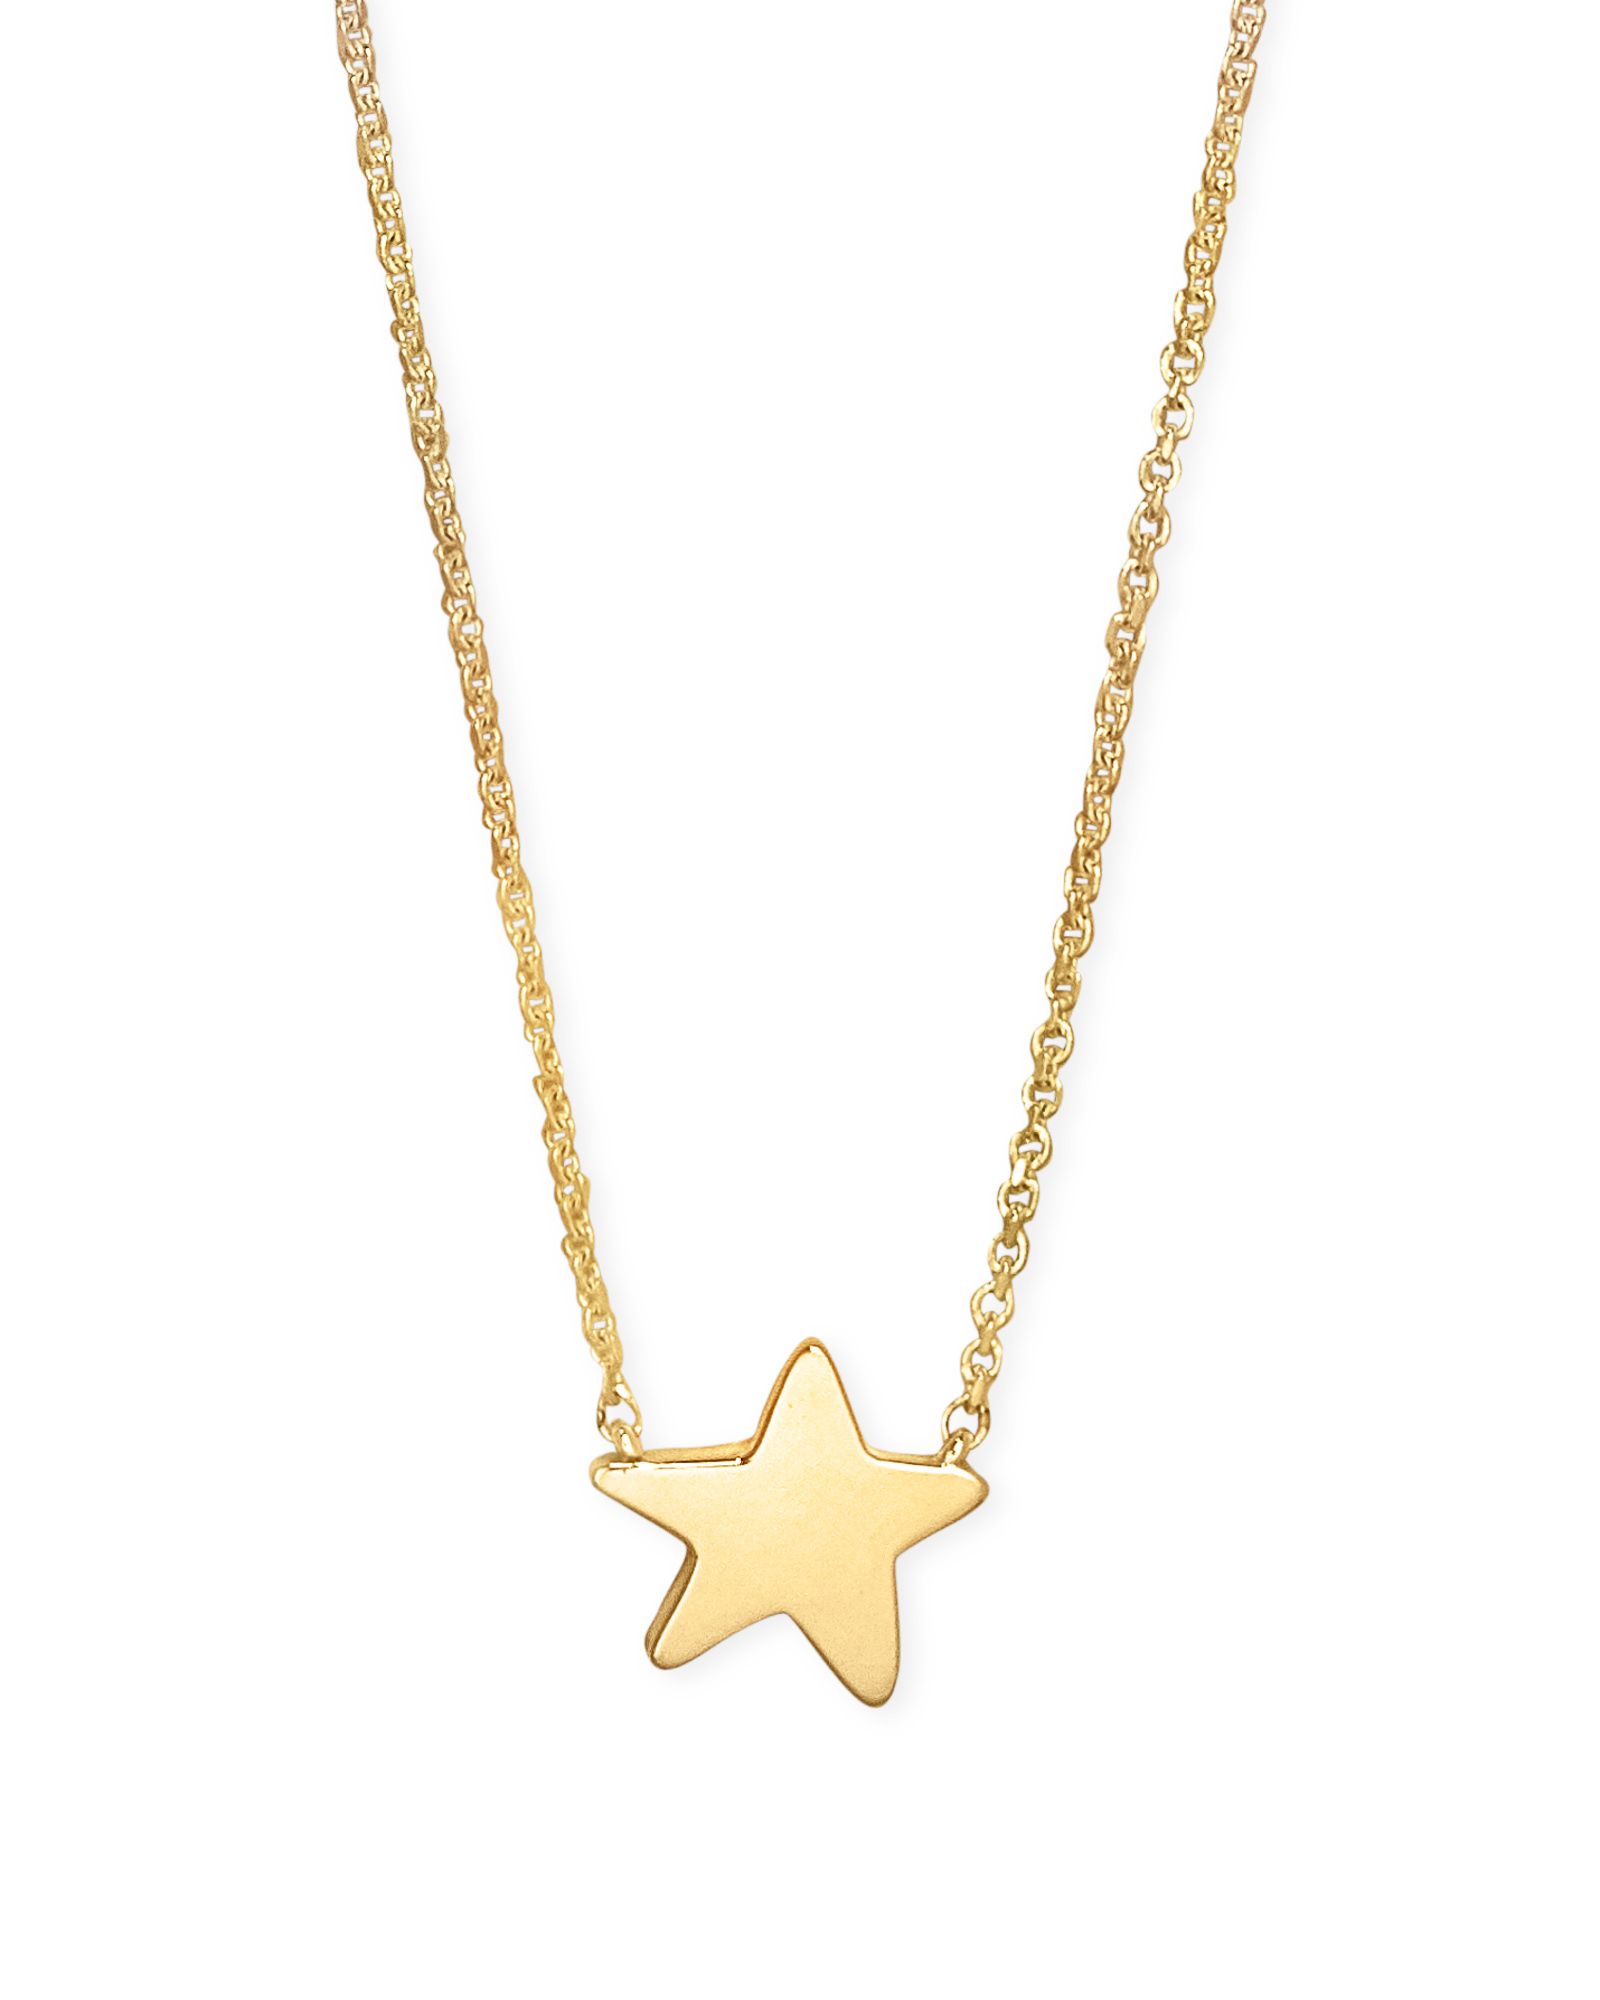 Jae Star Pendant Necklace in 18k Gold Vermeil | Kendra Scott